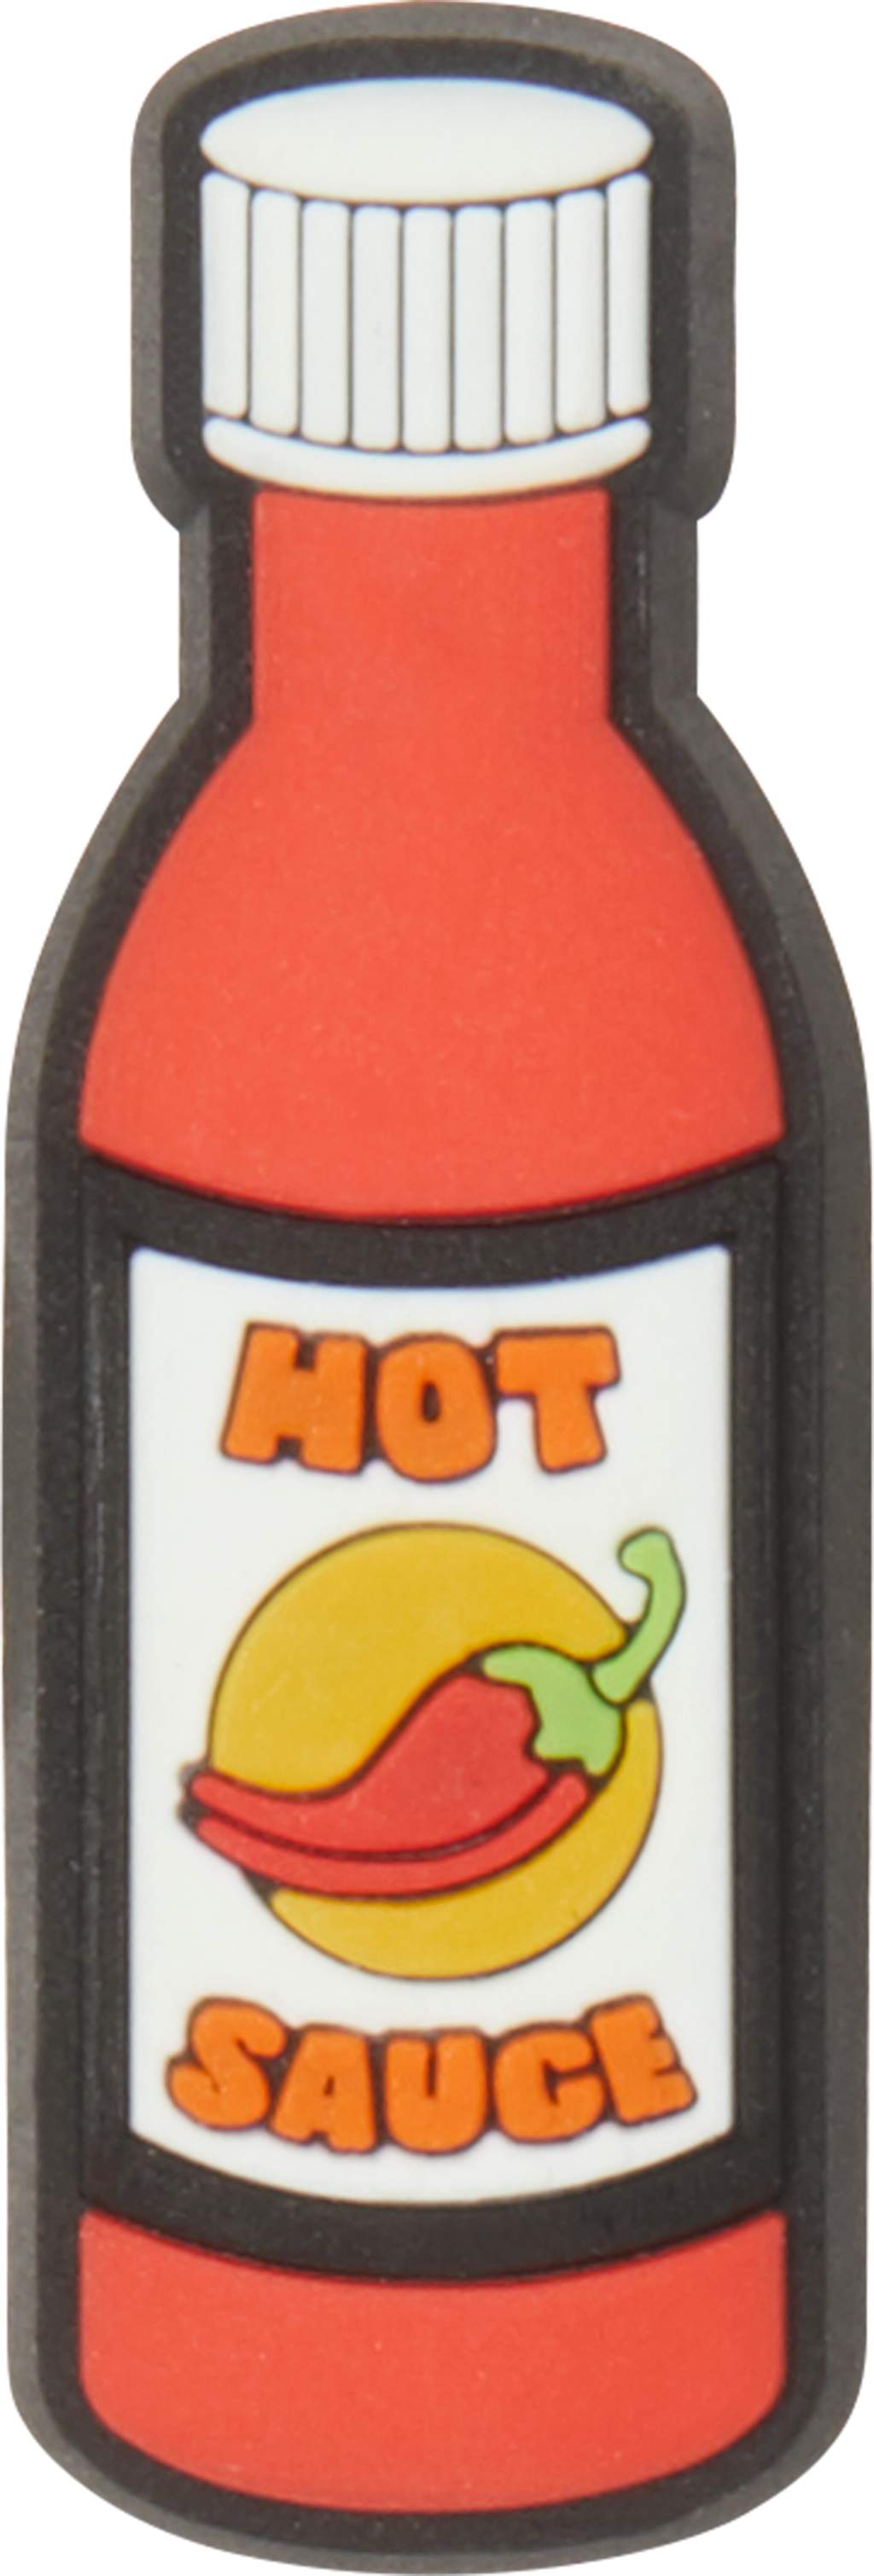 hot sauce jibbitz